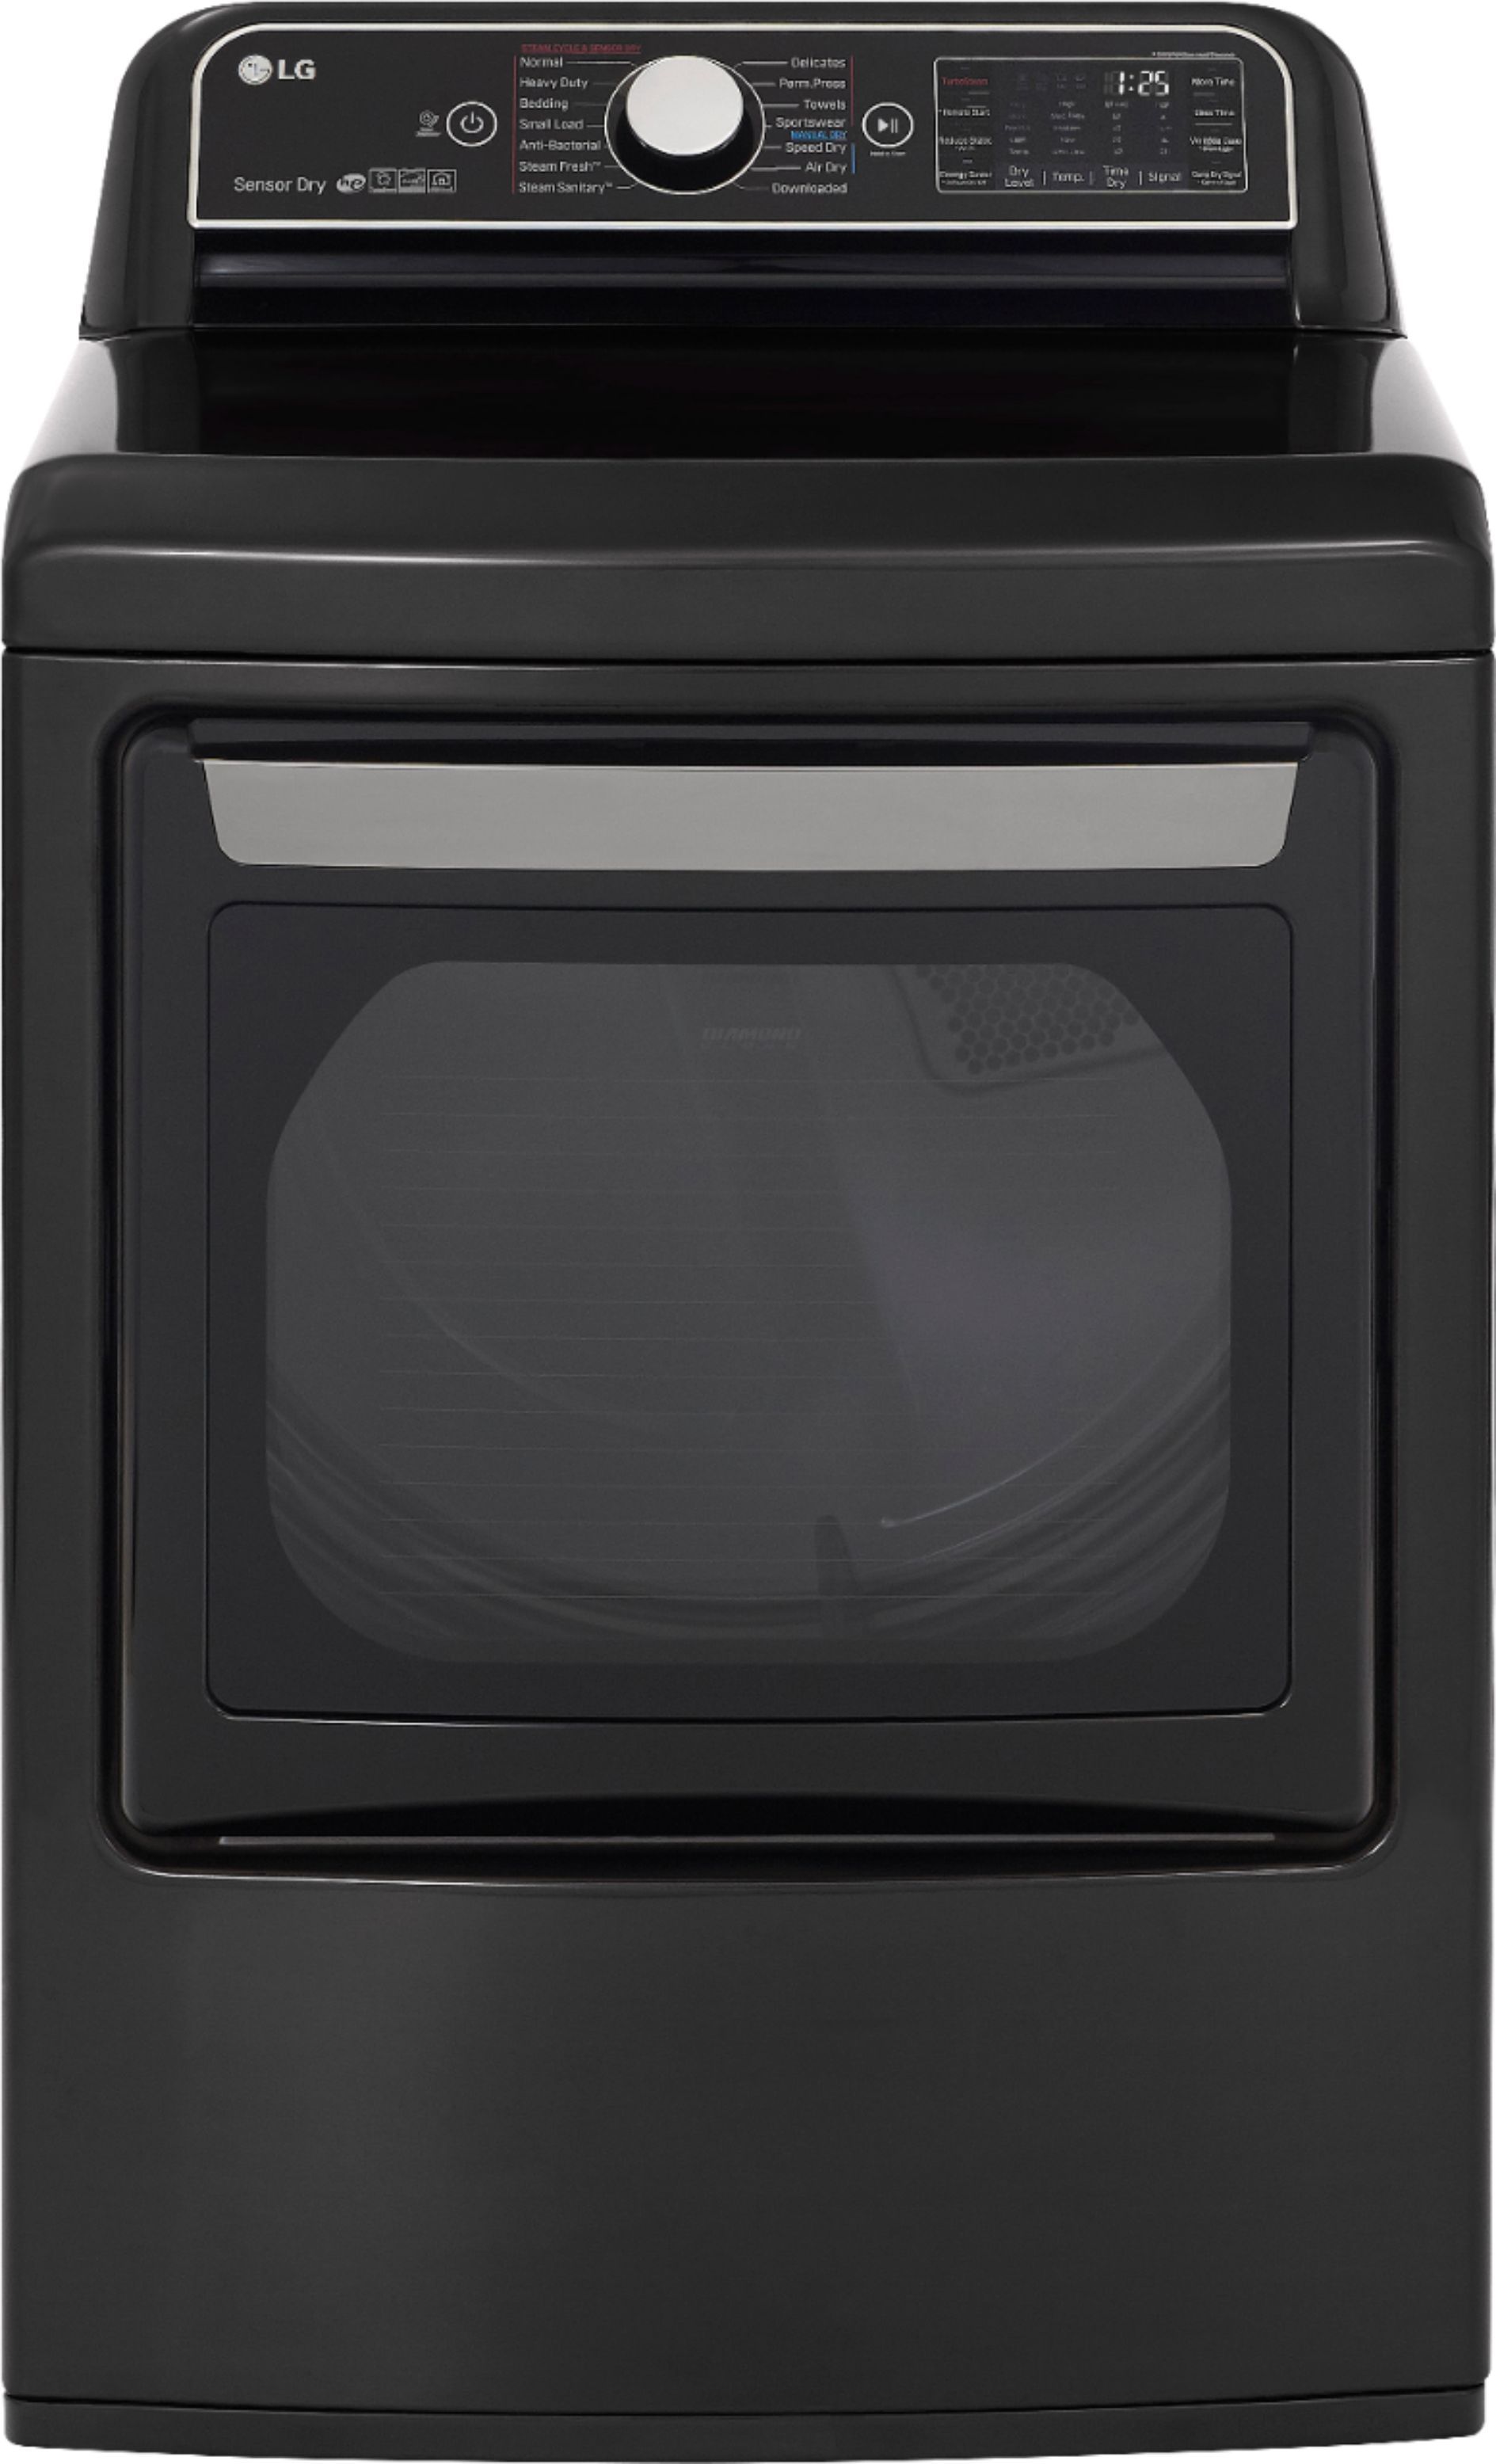 LG 7.3 Cu. Ft. Smart Electric Dryer with Steam and Sensor Dry Black steel DLEX7900BE - Best Buy | Best Buy U.S.